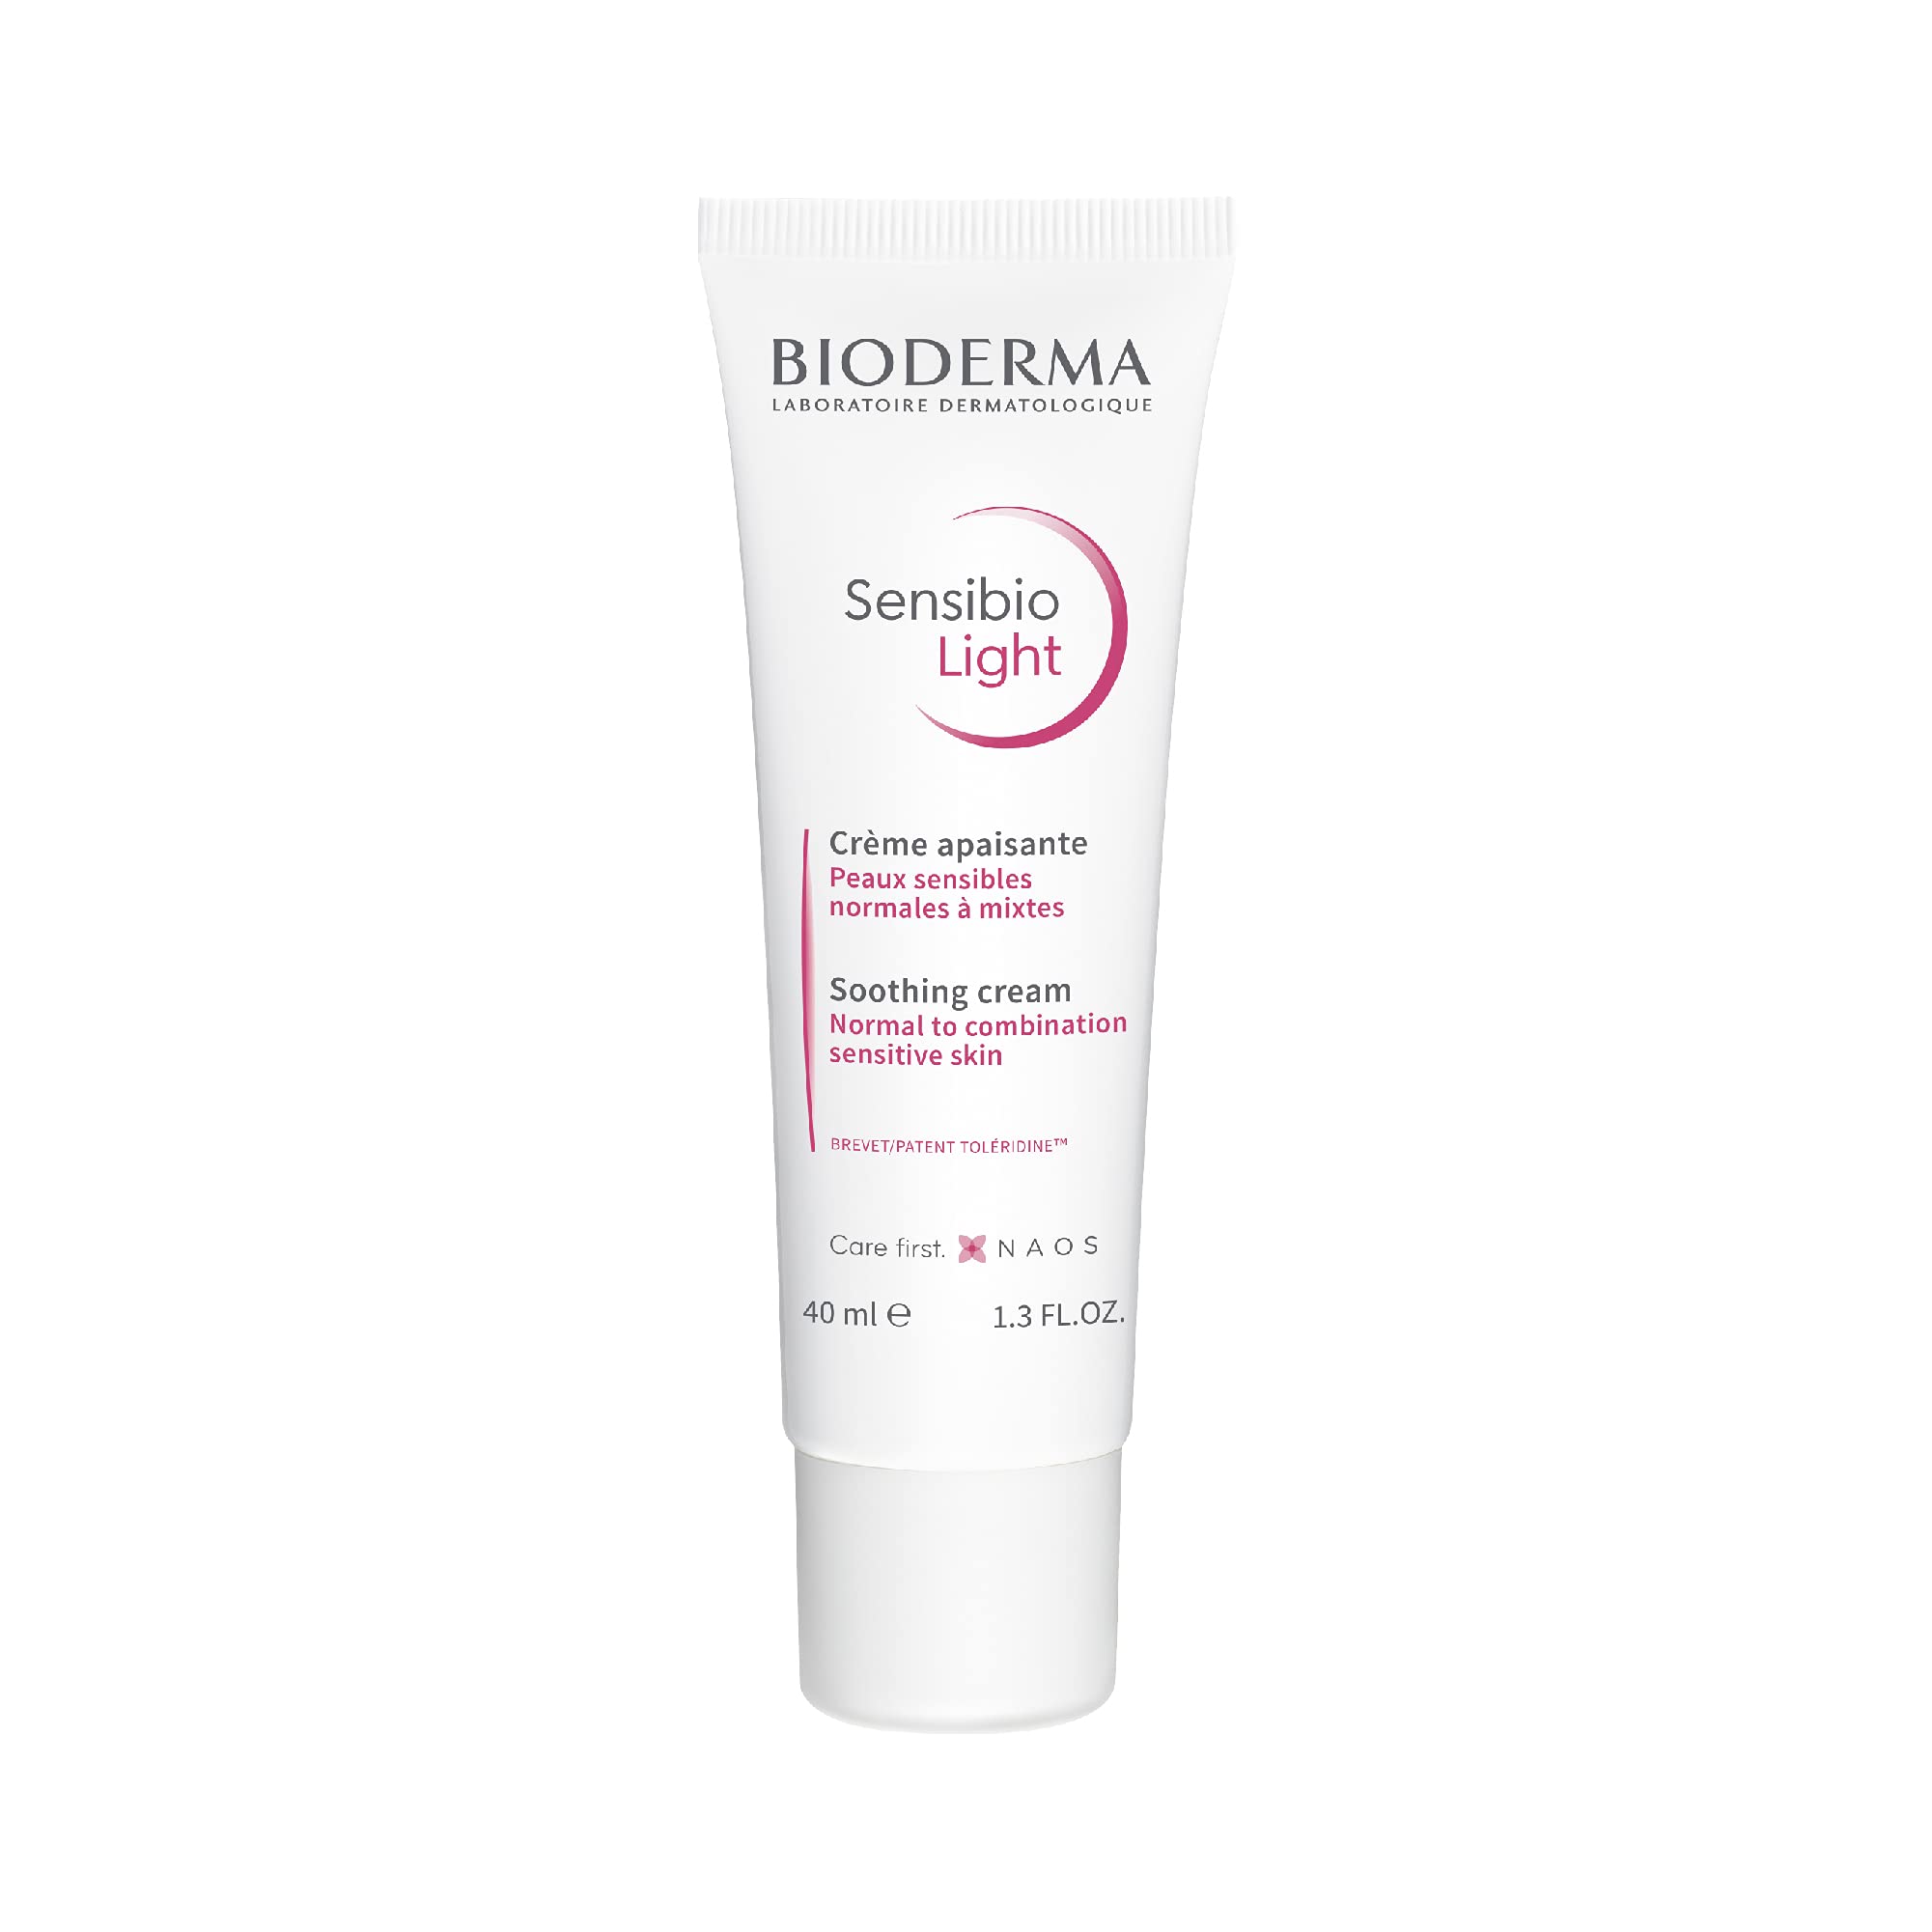 Book Cover Bioderma - Face Moisturizer - Sensibio - Light Cream - Skin Soothing - Face Cream for Sensitive Skin